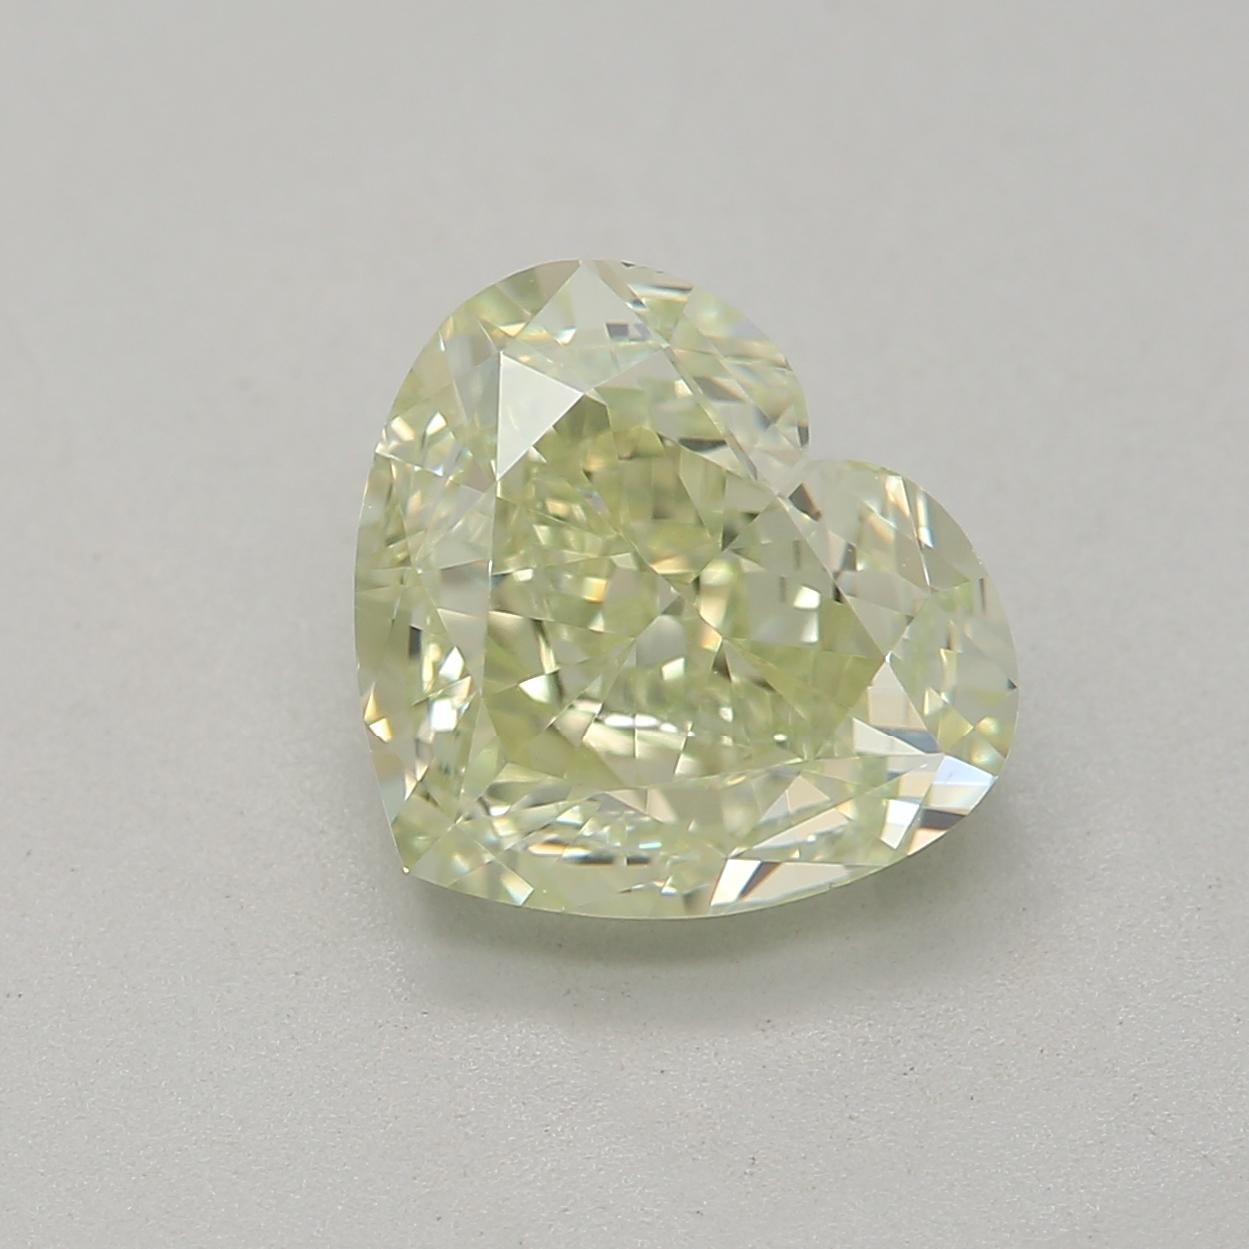 *100% NATURAL FANCY COLOUR DIAMOND*

✪ Diamond Details ✪

➛ Shape: Heart
➛ Colour Grade: Fancy Light Green Yellow
➛ Carat: 1.51
➛ Clarity: Vs1
➛ GIA Certified 

^FEATURES OF THE DIAMOND^

